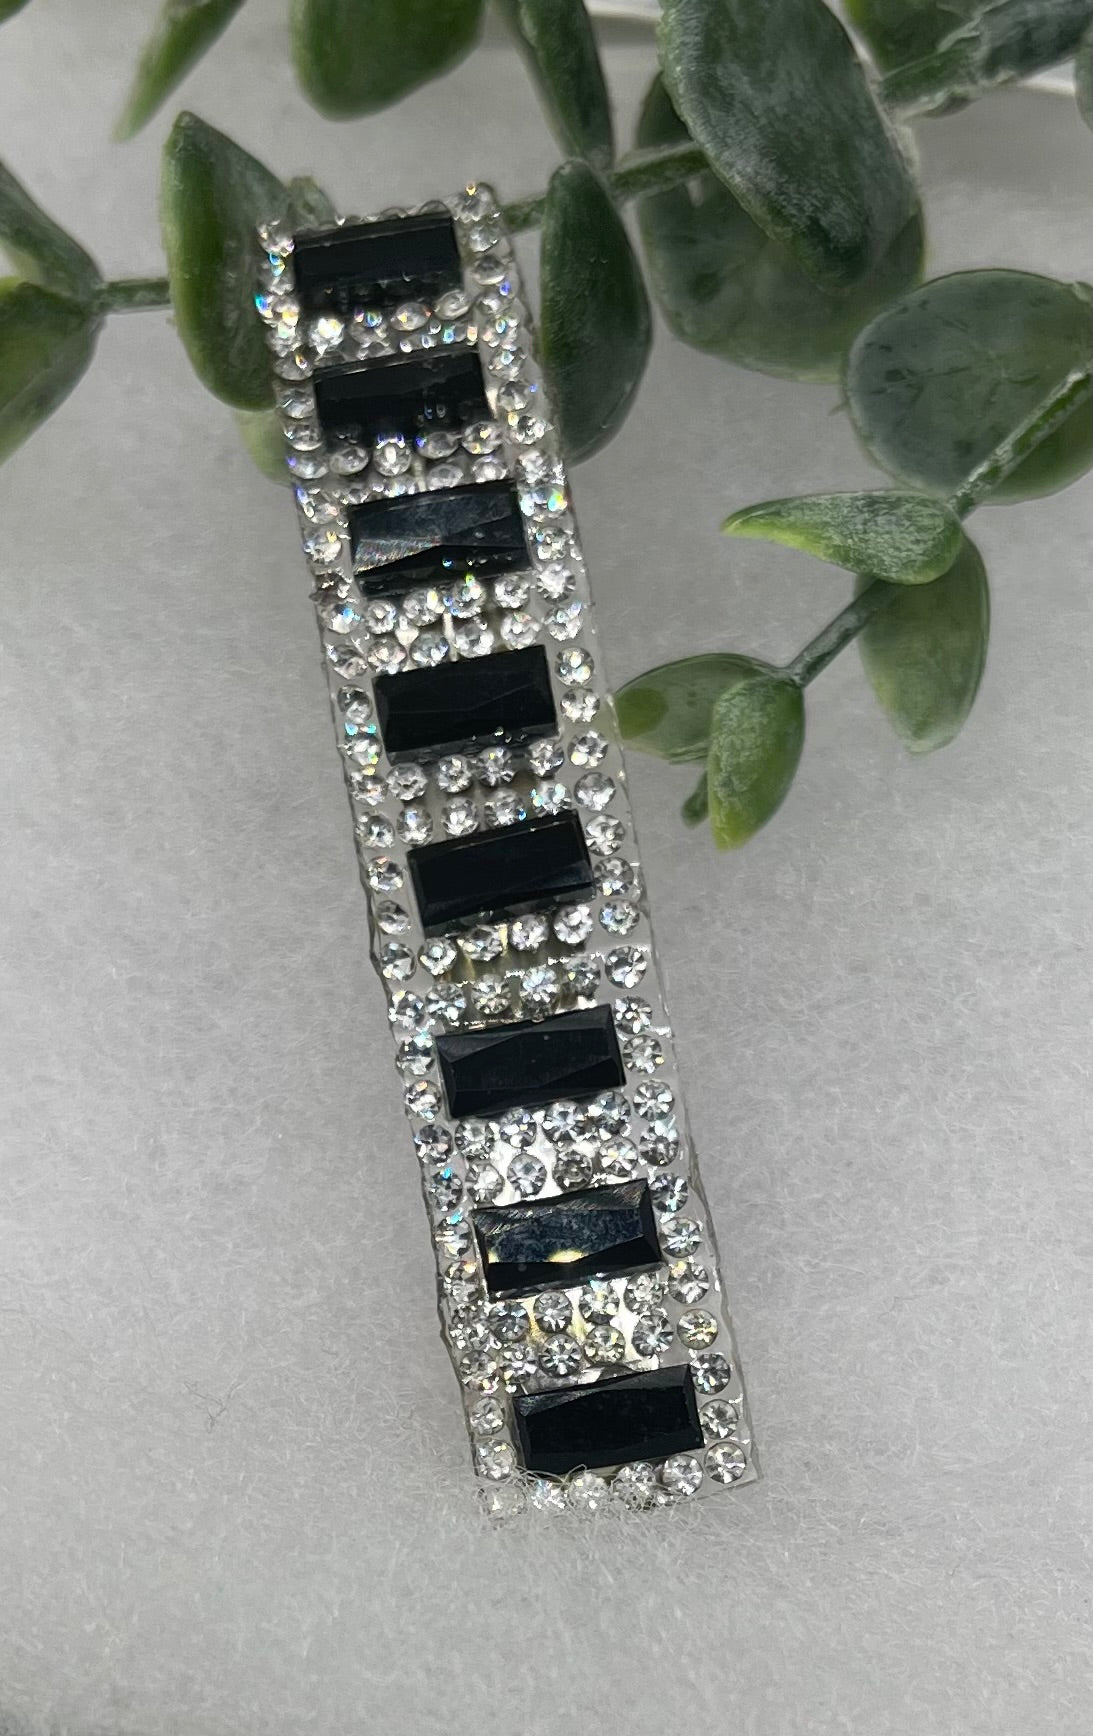 Black silver Acrylic rhinestone silver tone hair clip barrettes approximately 3.0” long hair accessory